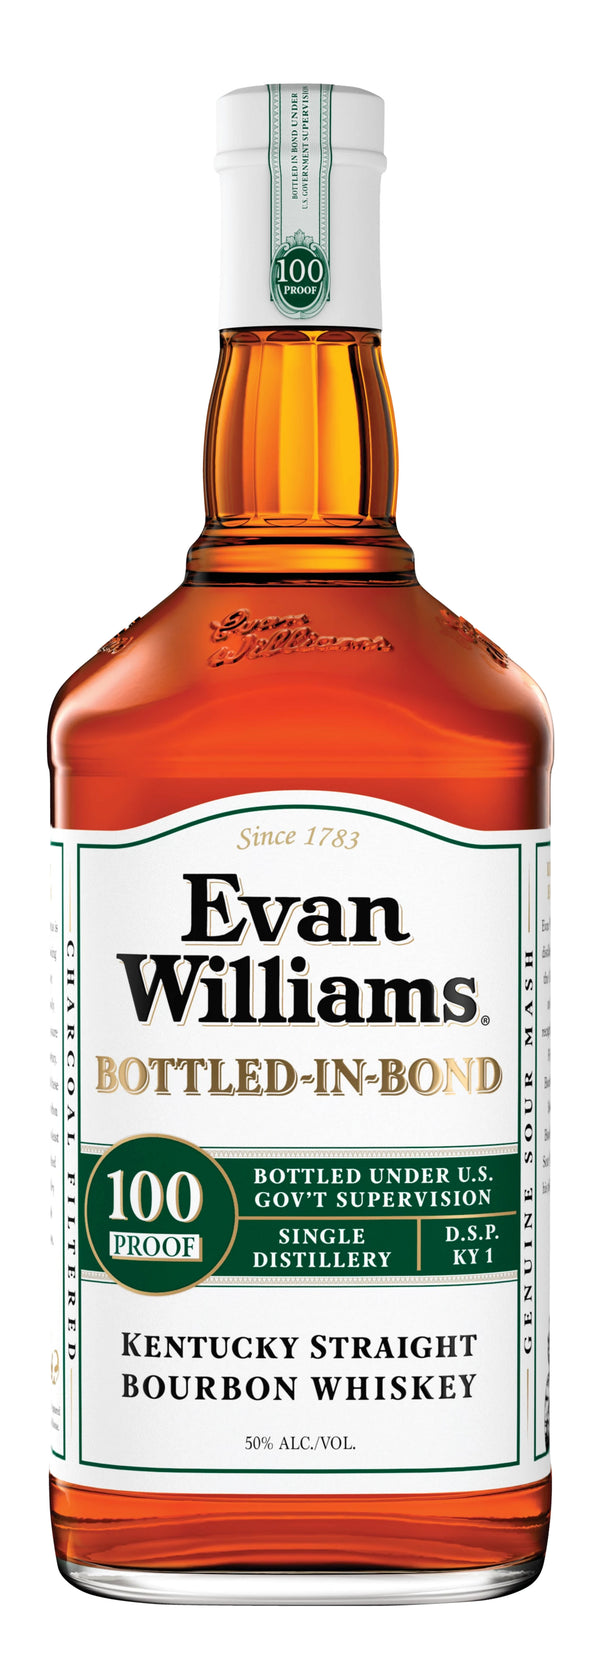 EVAN WILLIAMS WHITE BTTL BOND 1750ML